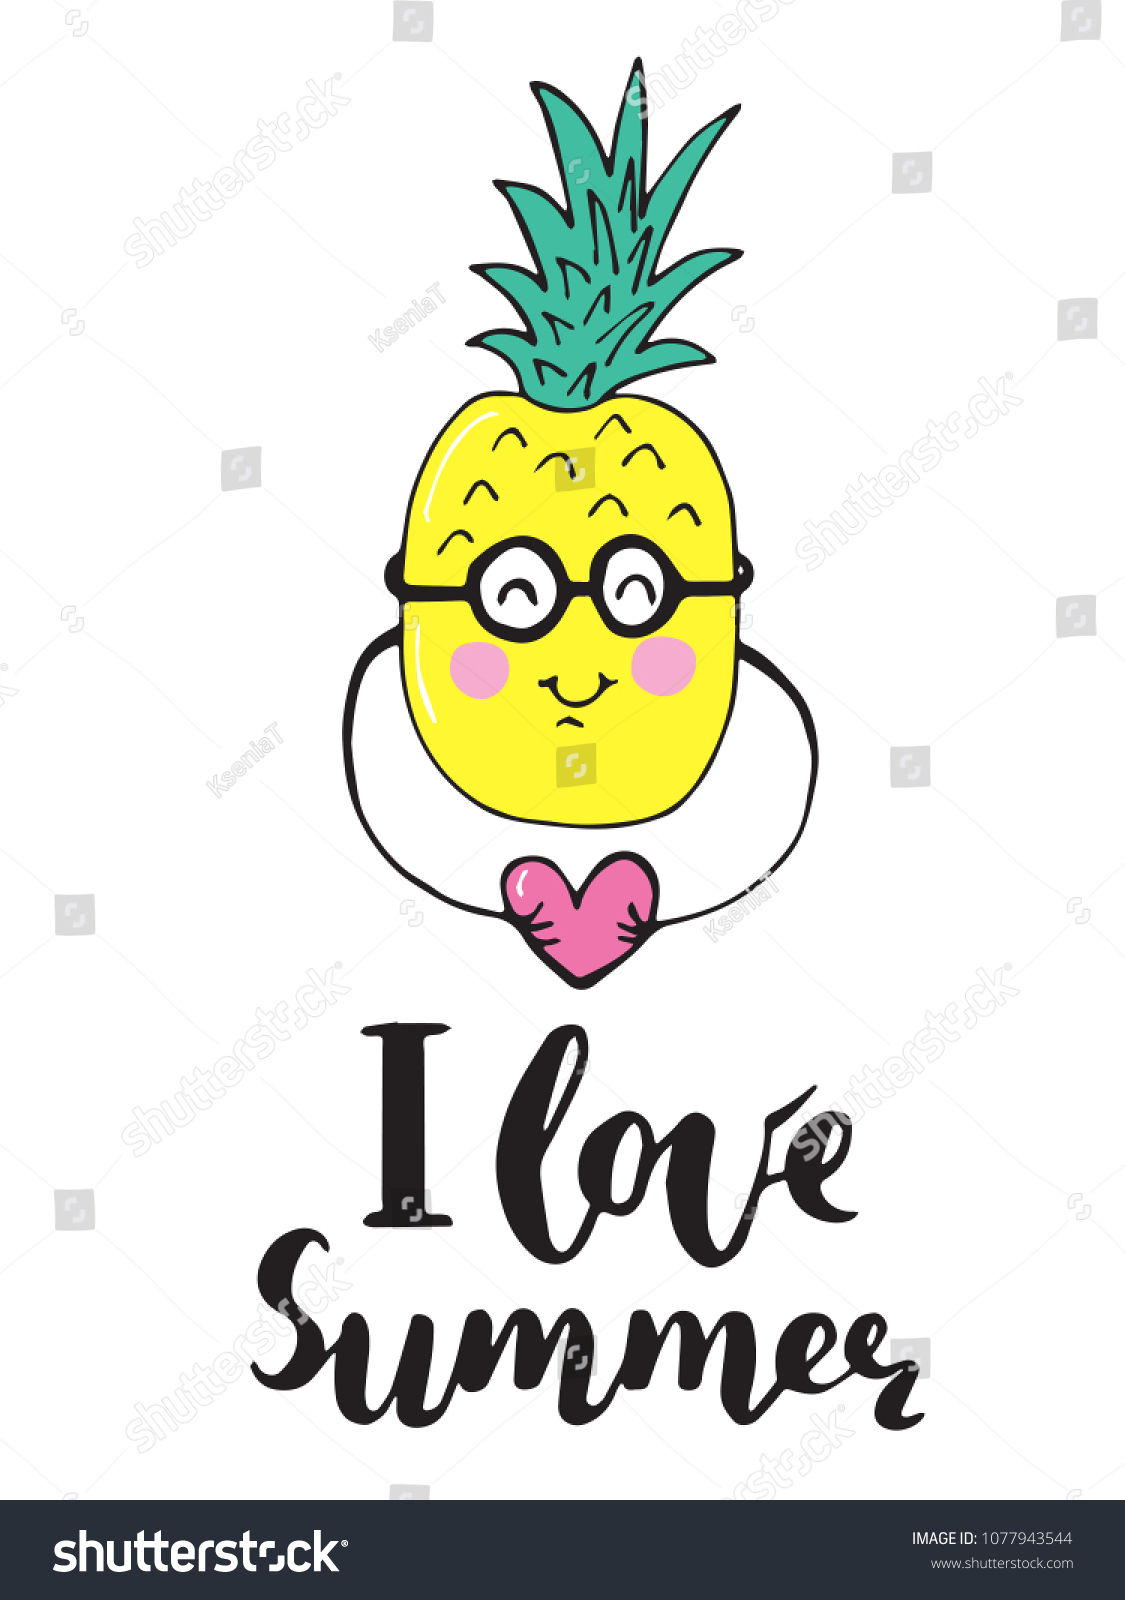 I Love Heart Pineapple Kids Sweatshirt